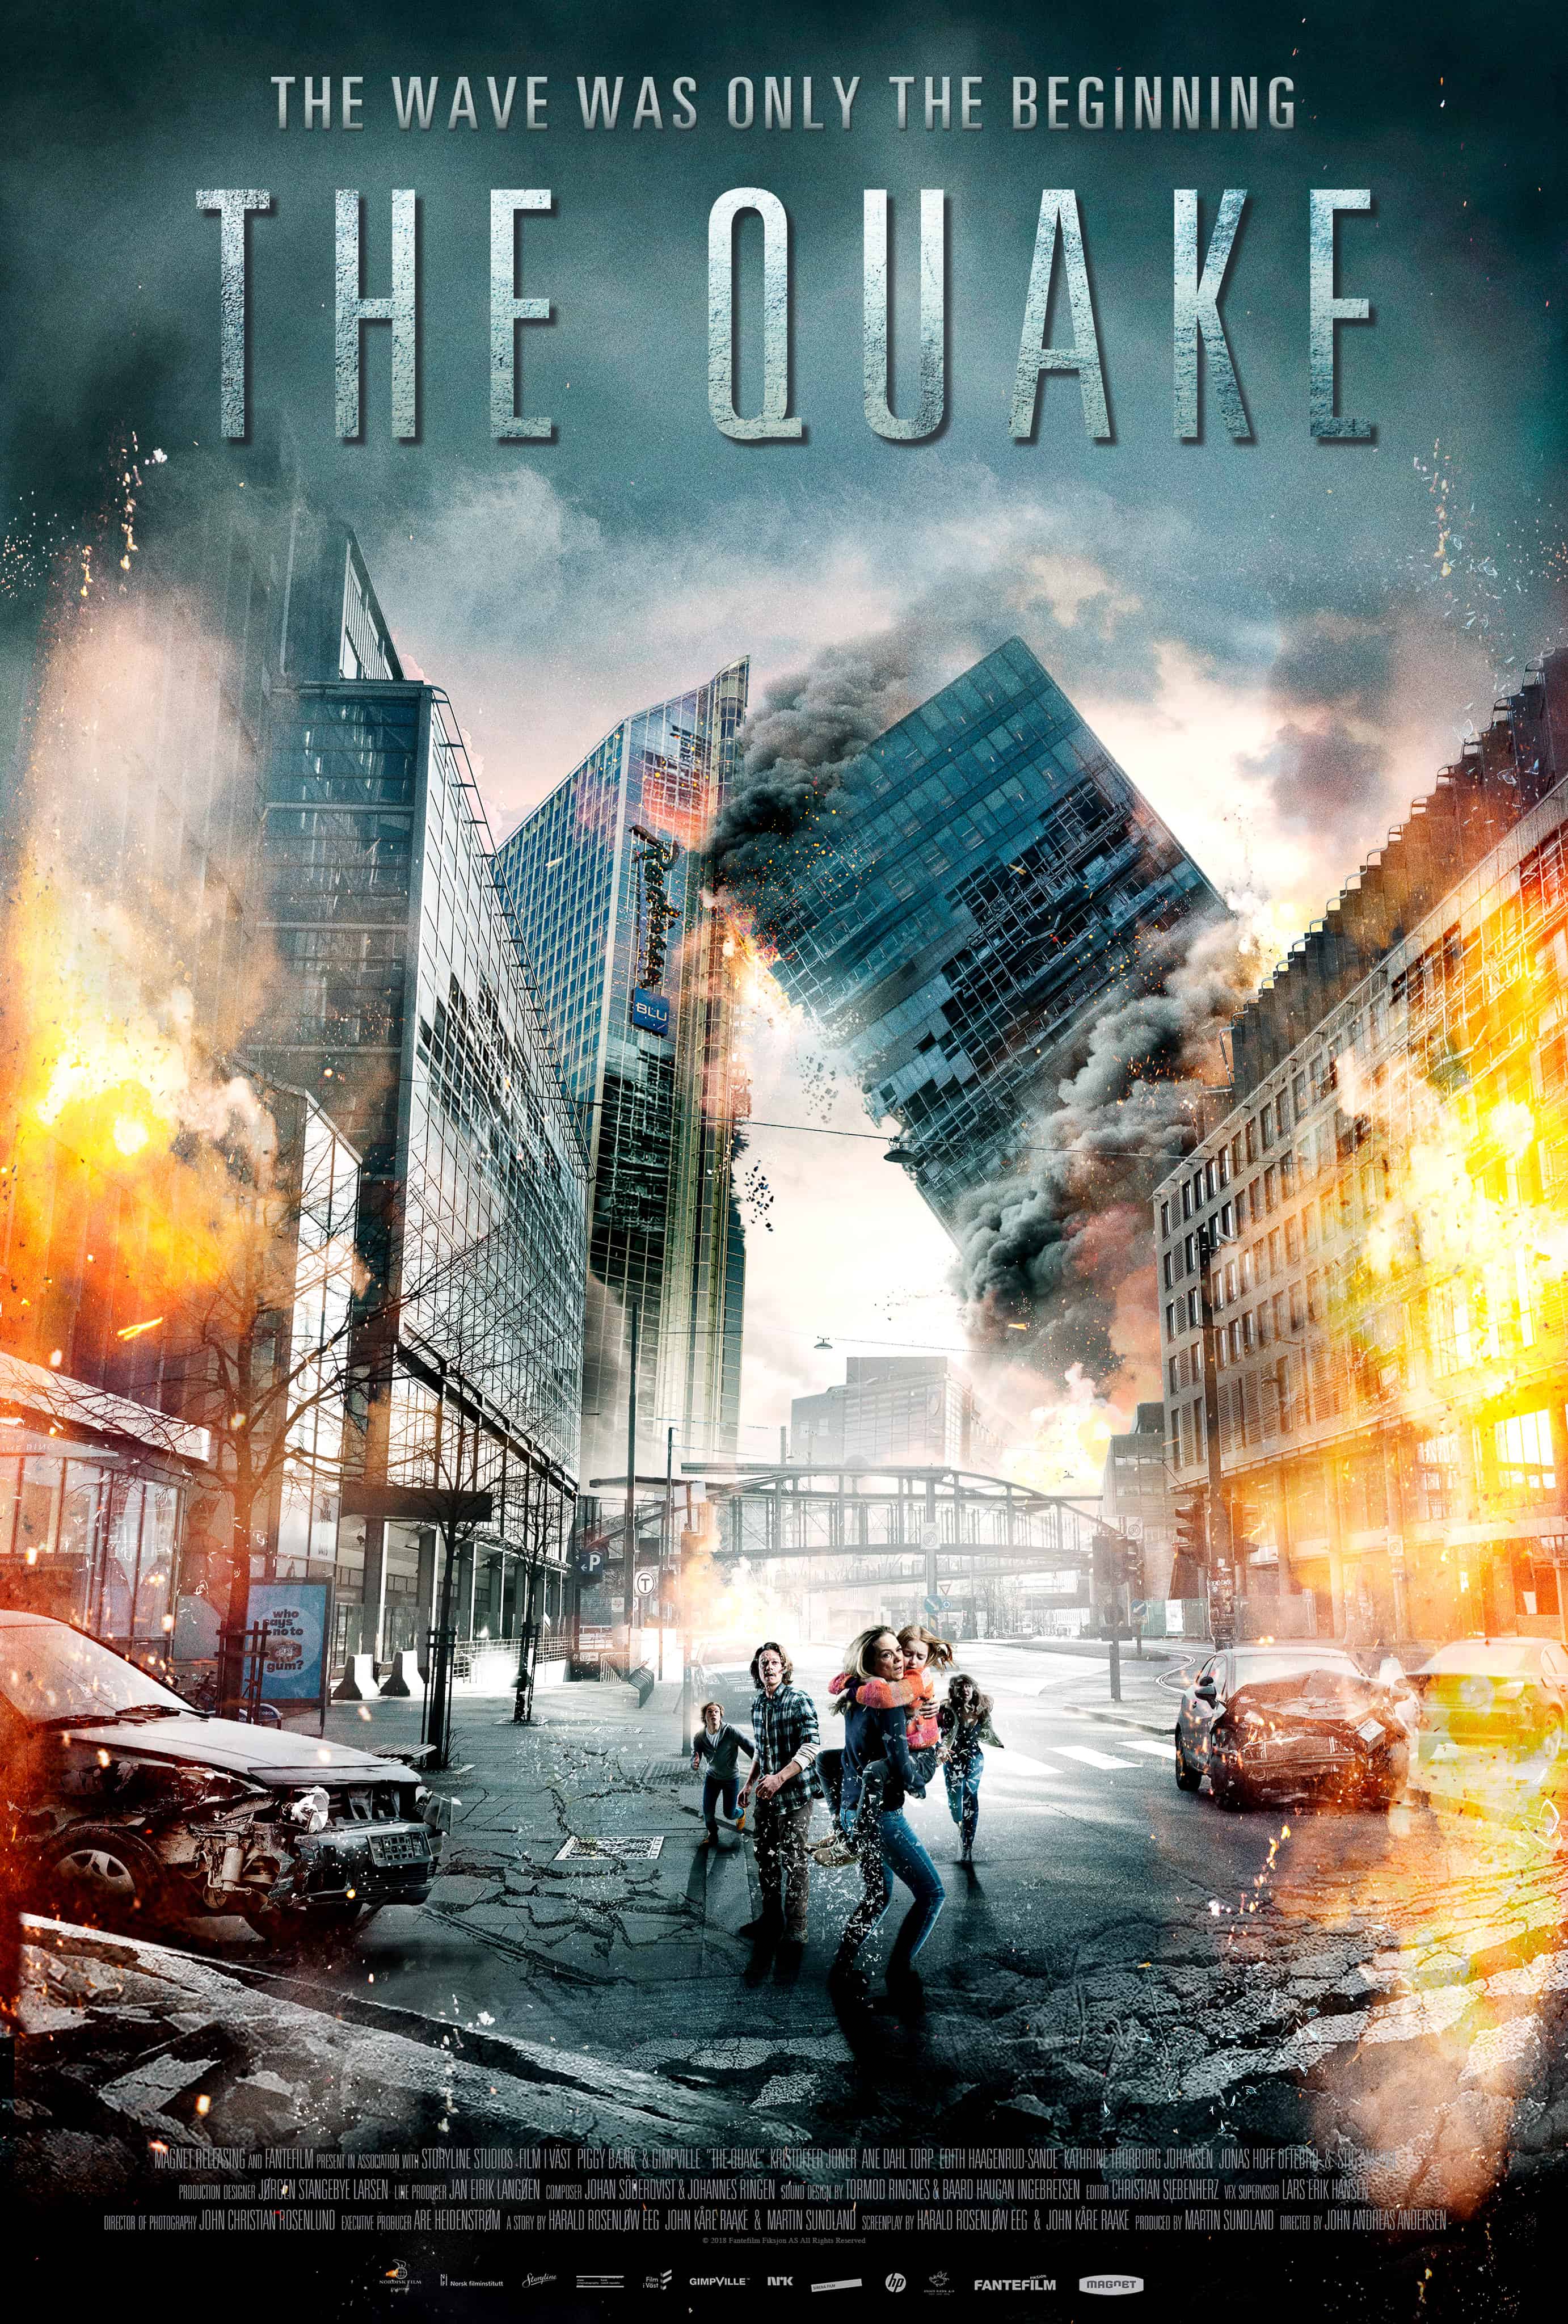 The Quake (2018) มหาวิบัติแผ่นดินถล่มโลก